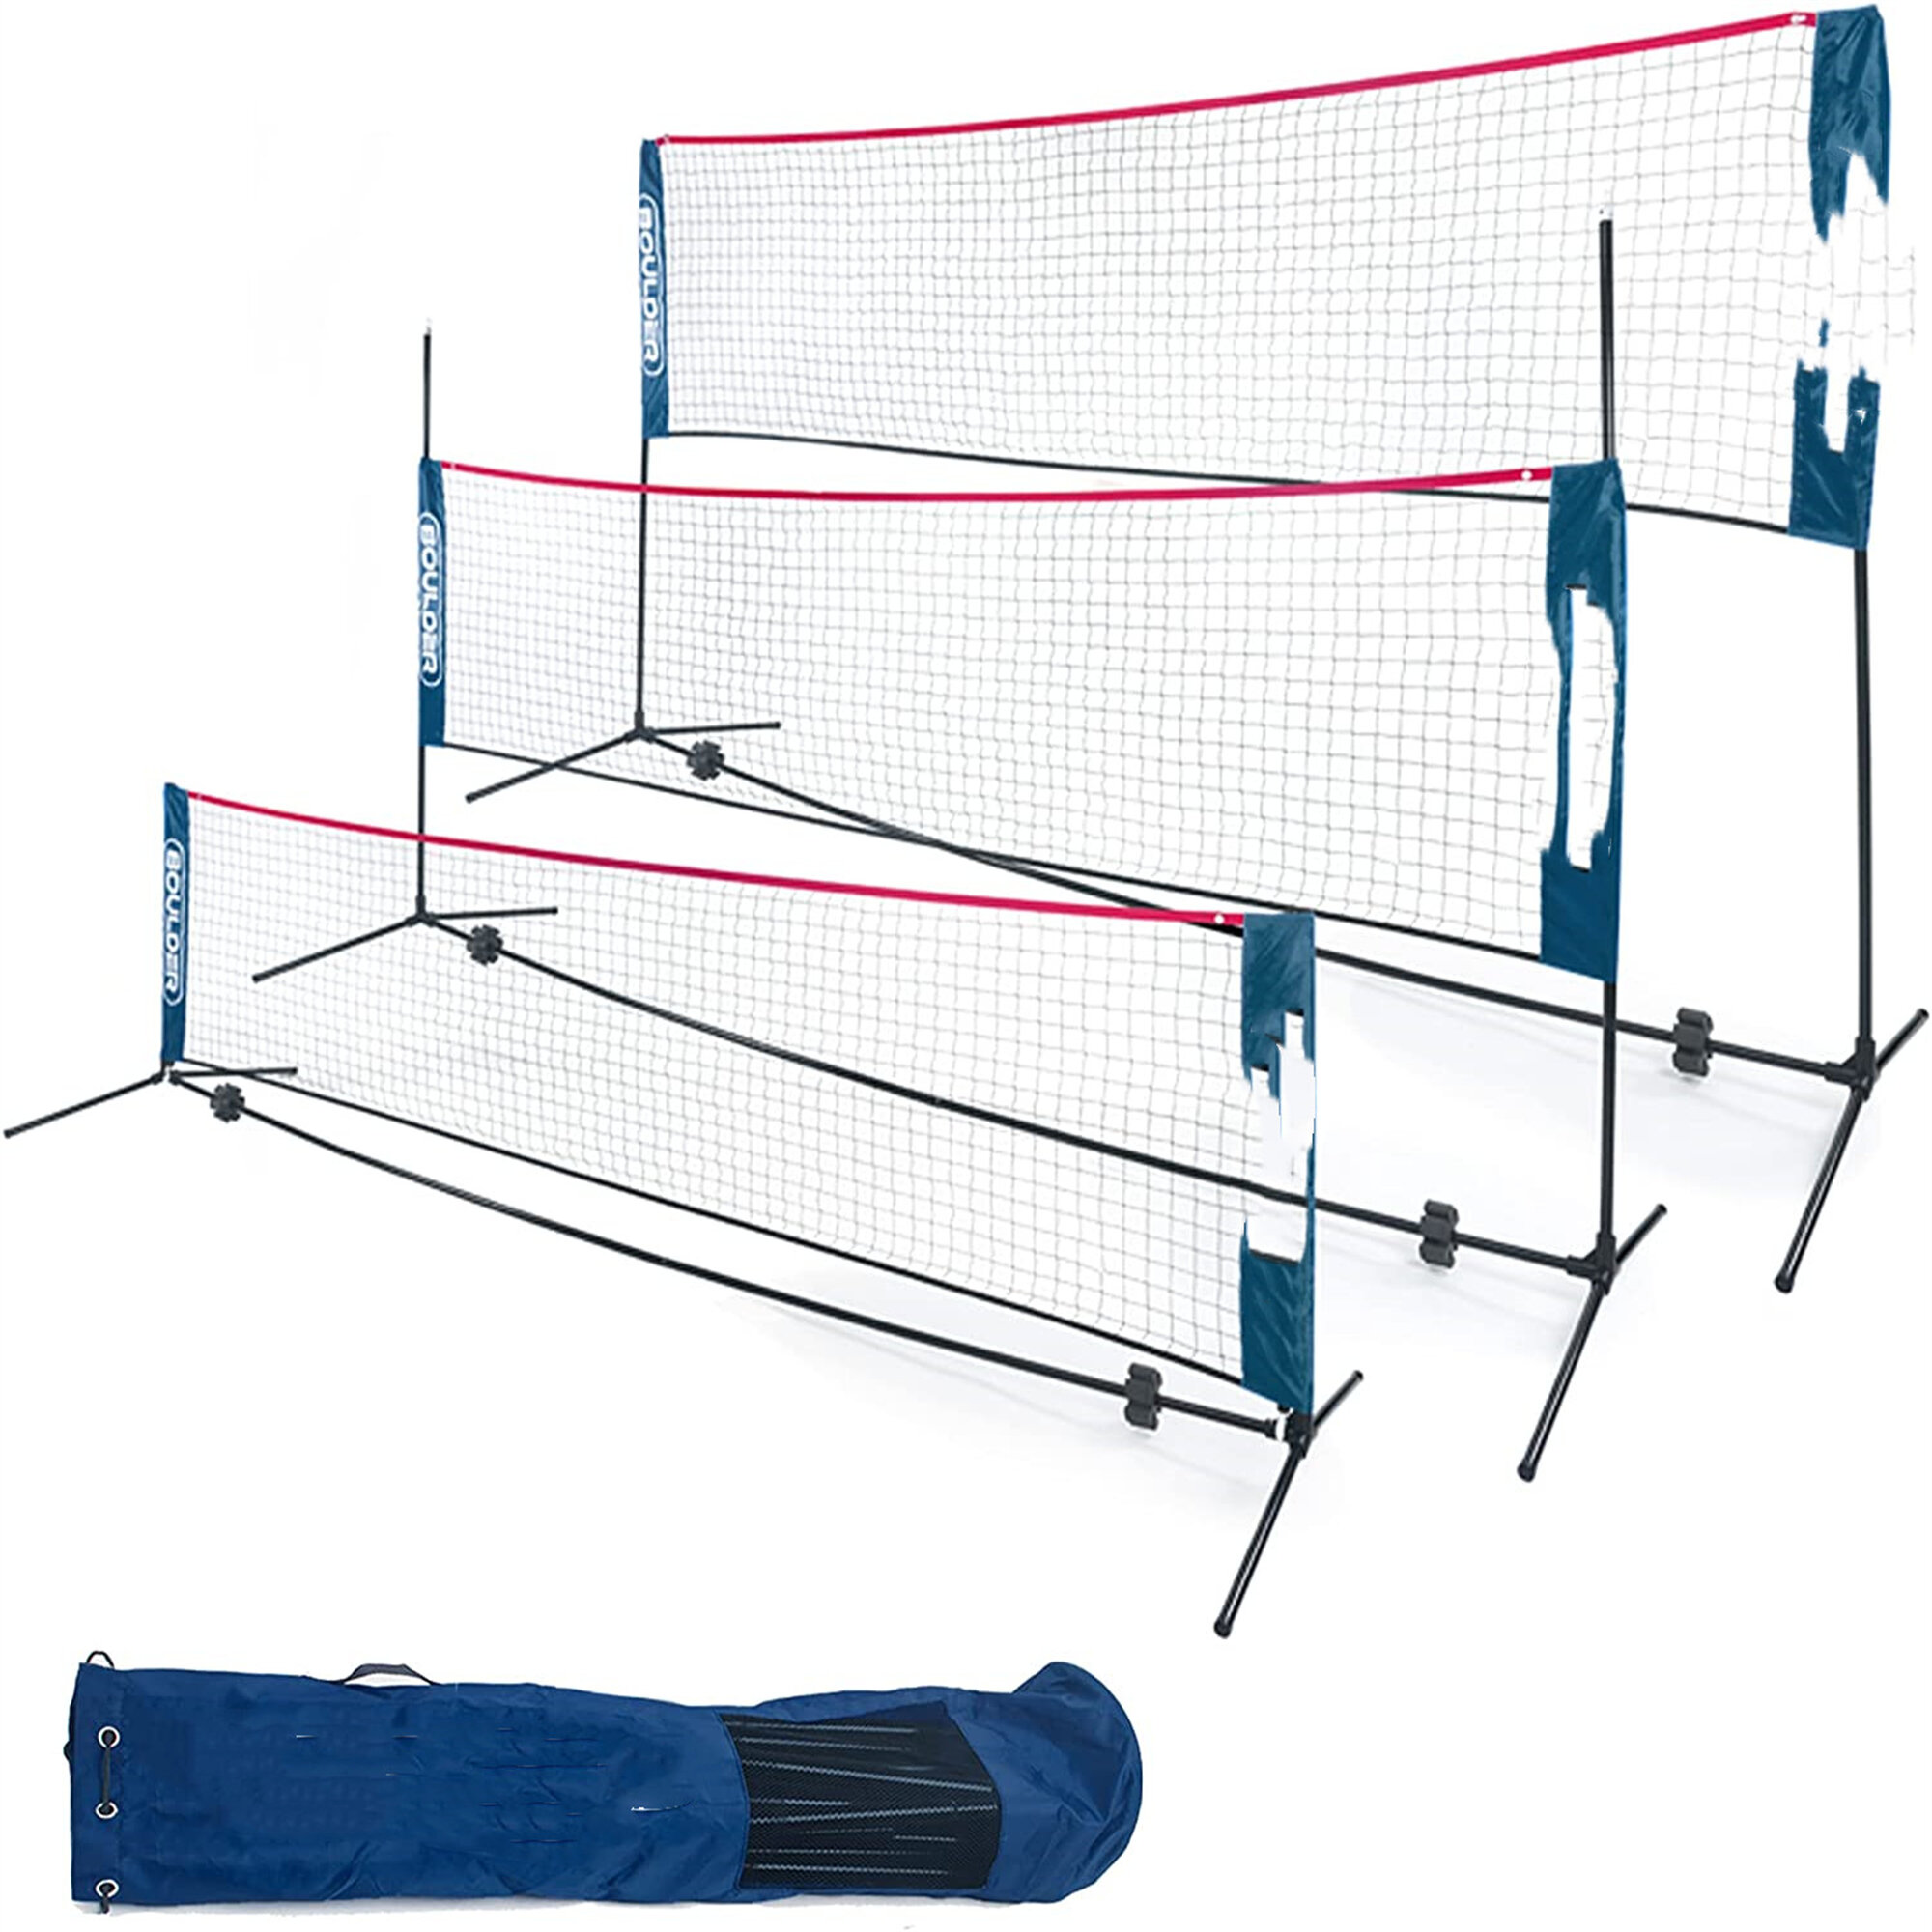 Easy Setup for Indoor & Outdoor -10FT,14FT,17FT Portable Badminton Net Set w/Poles & Bag- for Kids Volleyball Soccer Tennis Pickleball 